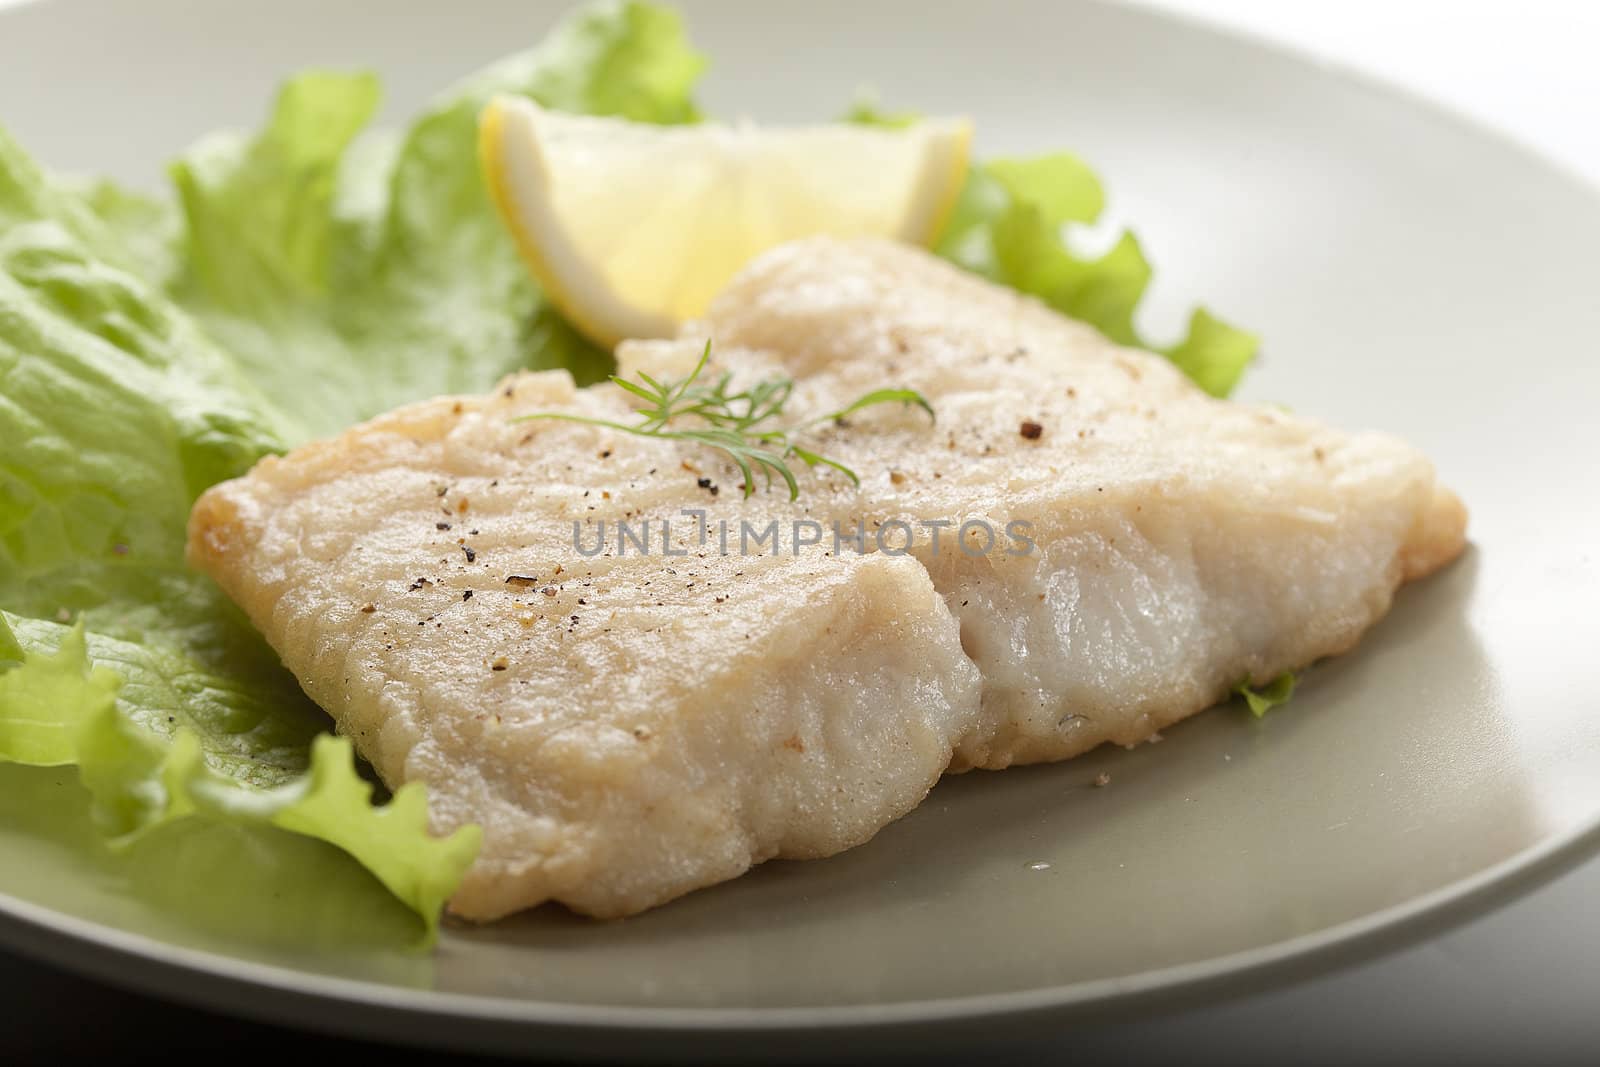 Fried fish by Angorius